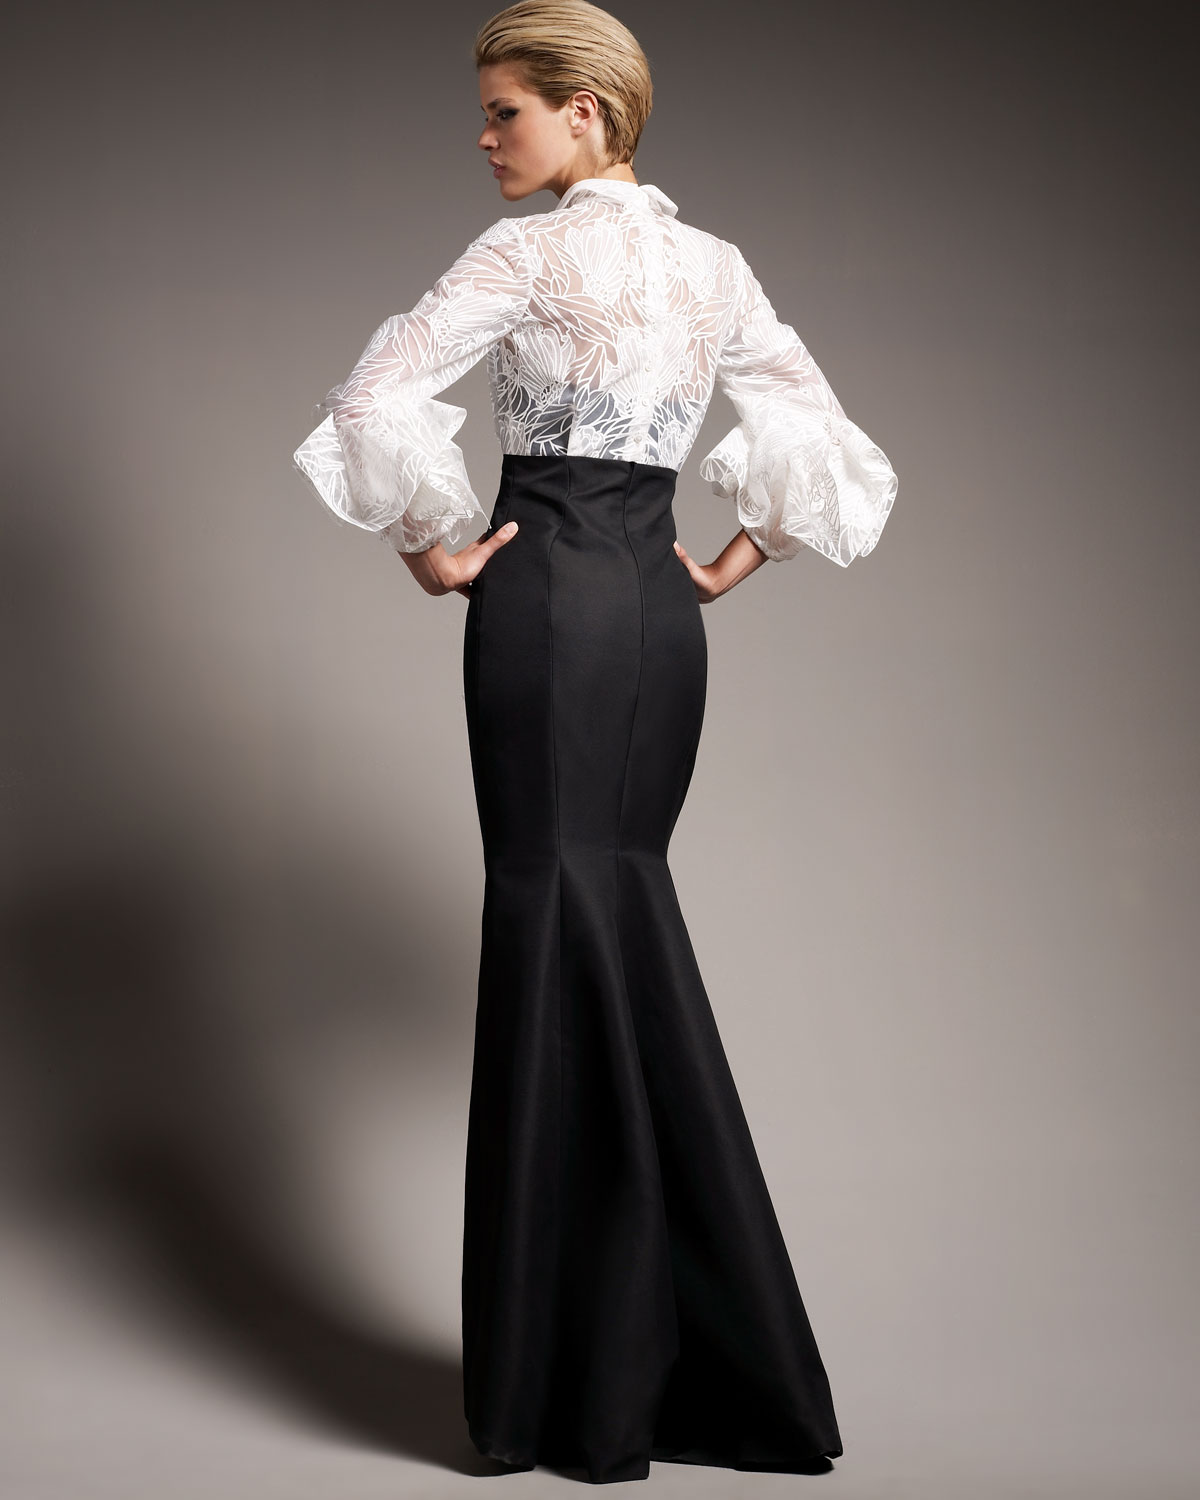 Lyst - Carolina Herrera Origami-sleeve Shirted Gown in White